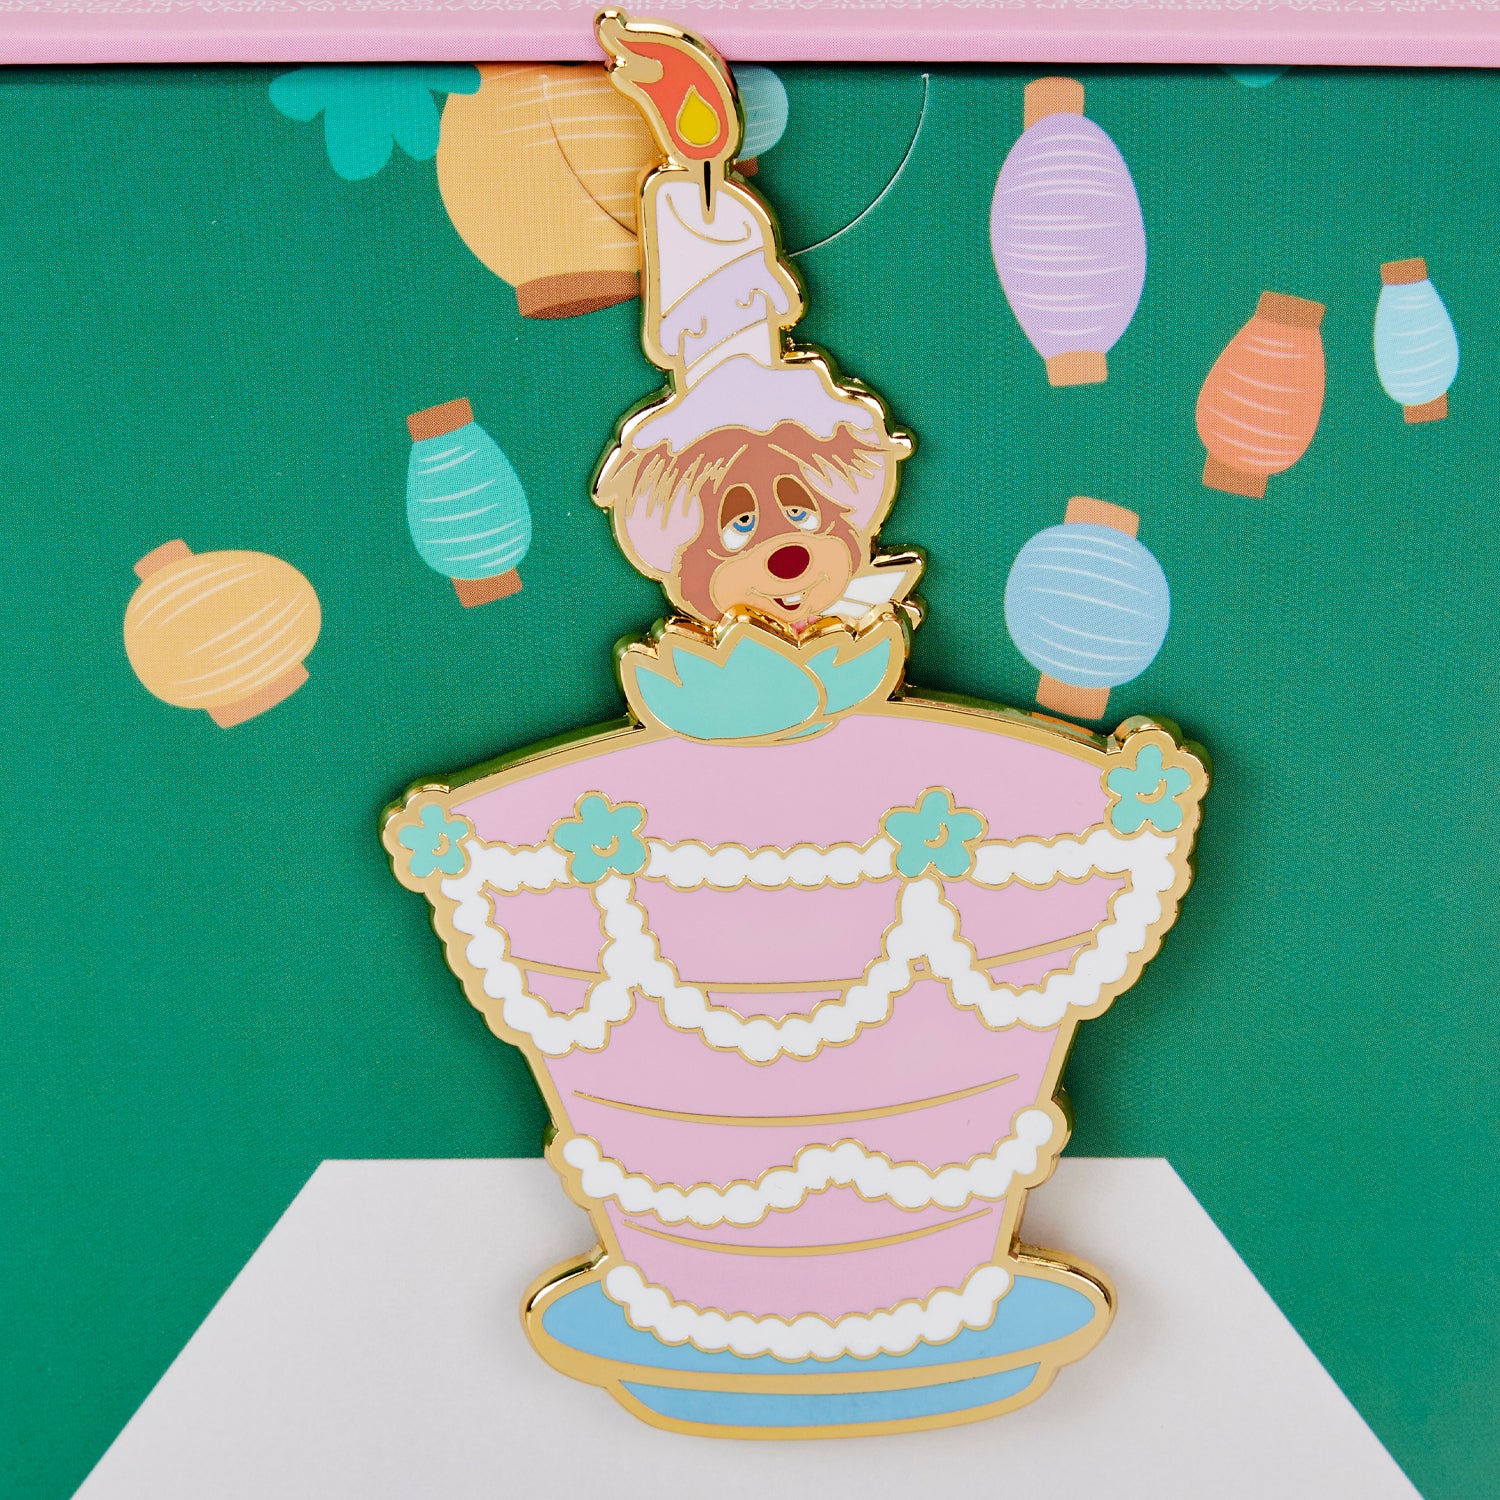 Loungefly x Disney Alice in Wonderland Unbirthday Cake Sliding 3 Inch Pin